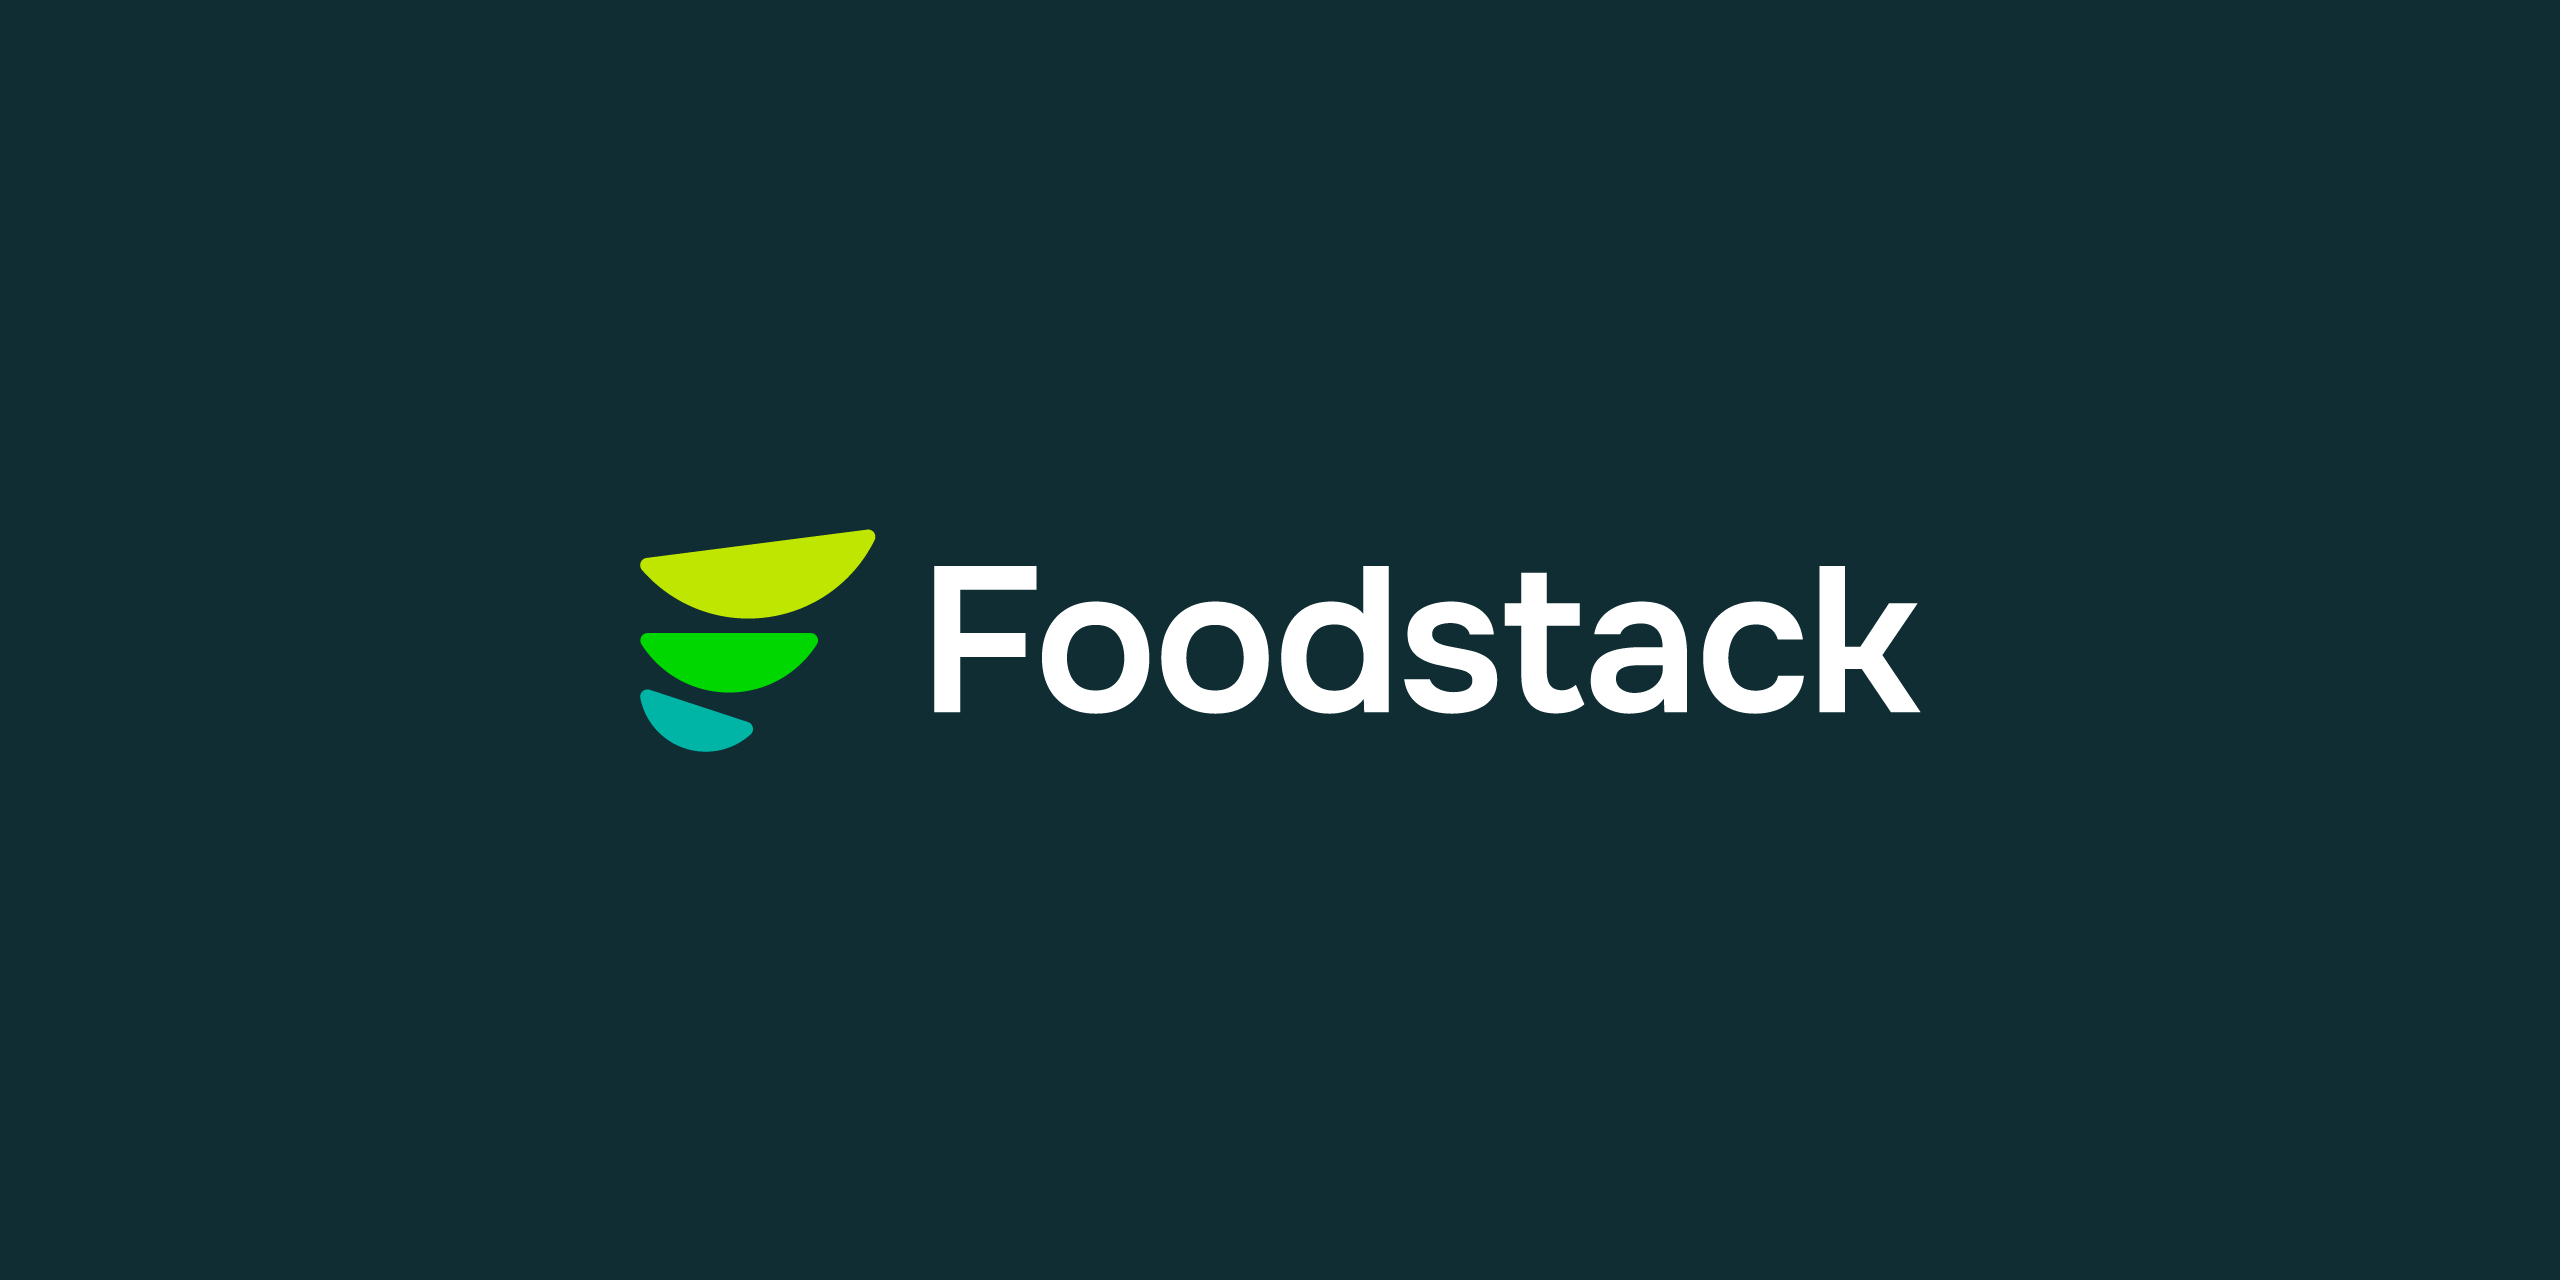 Foodstack logo on a dark background, highlighting its sleek and professional design